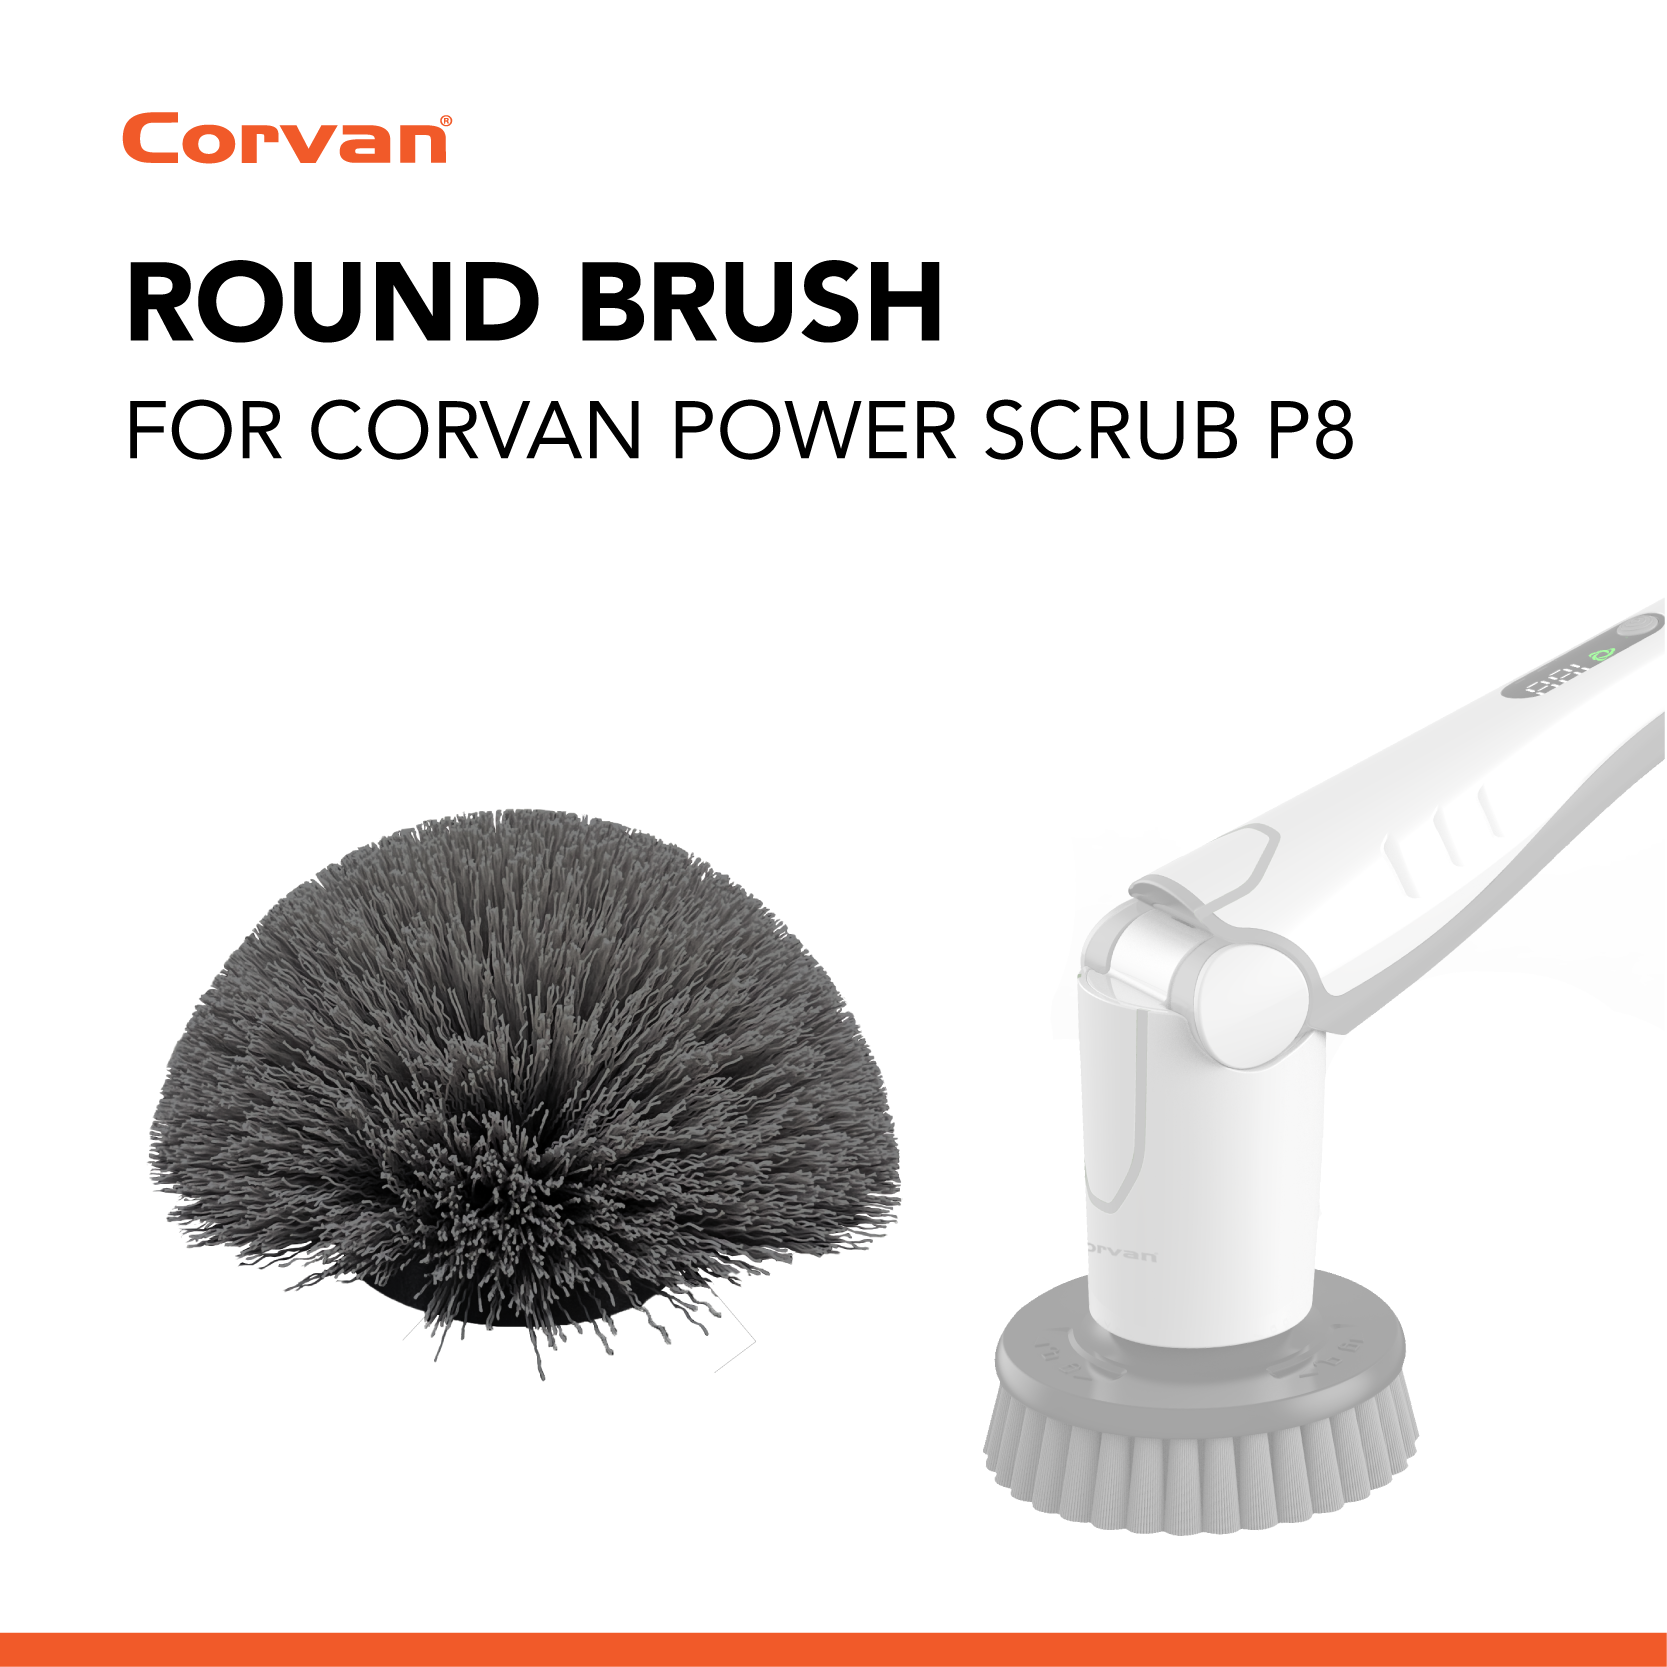 Corvan Power Scrub P8 Genuine Consumables & Parts